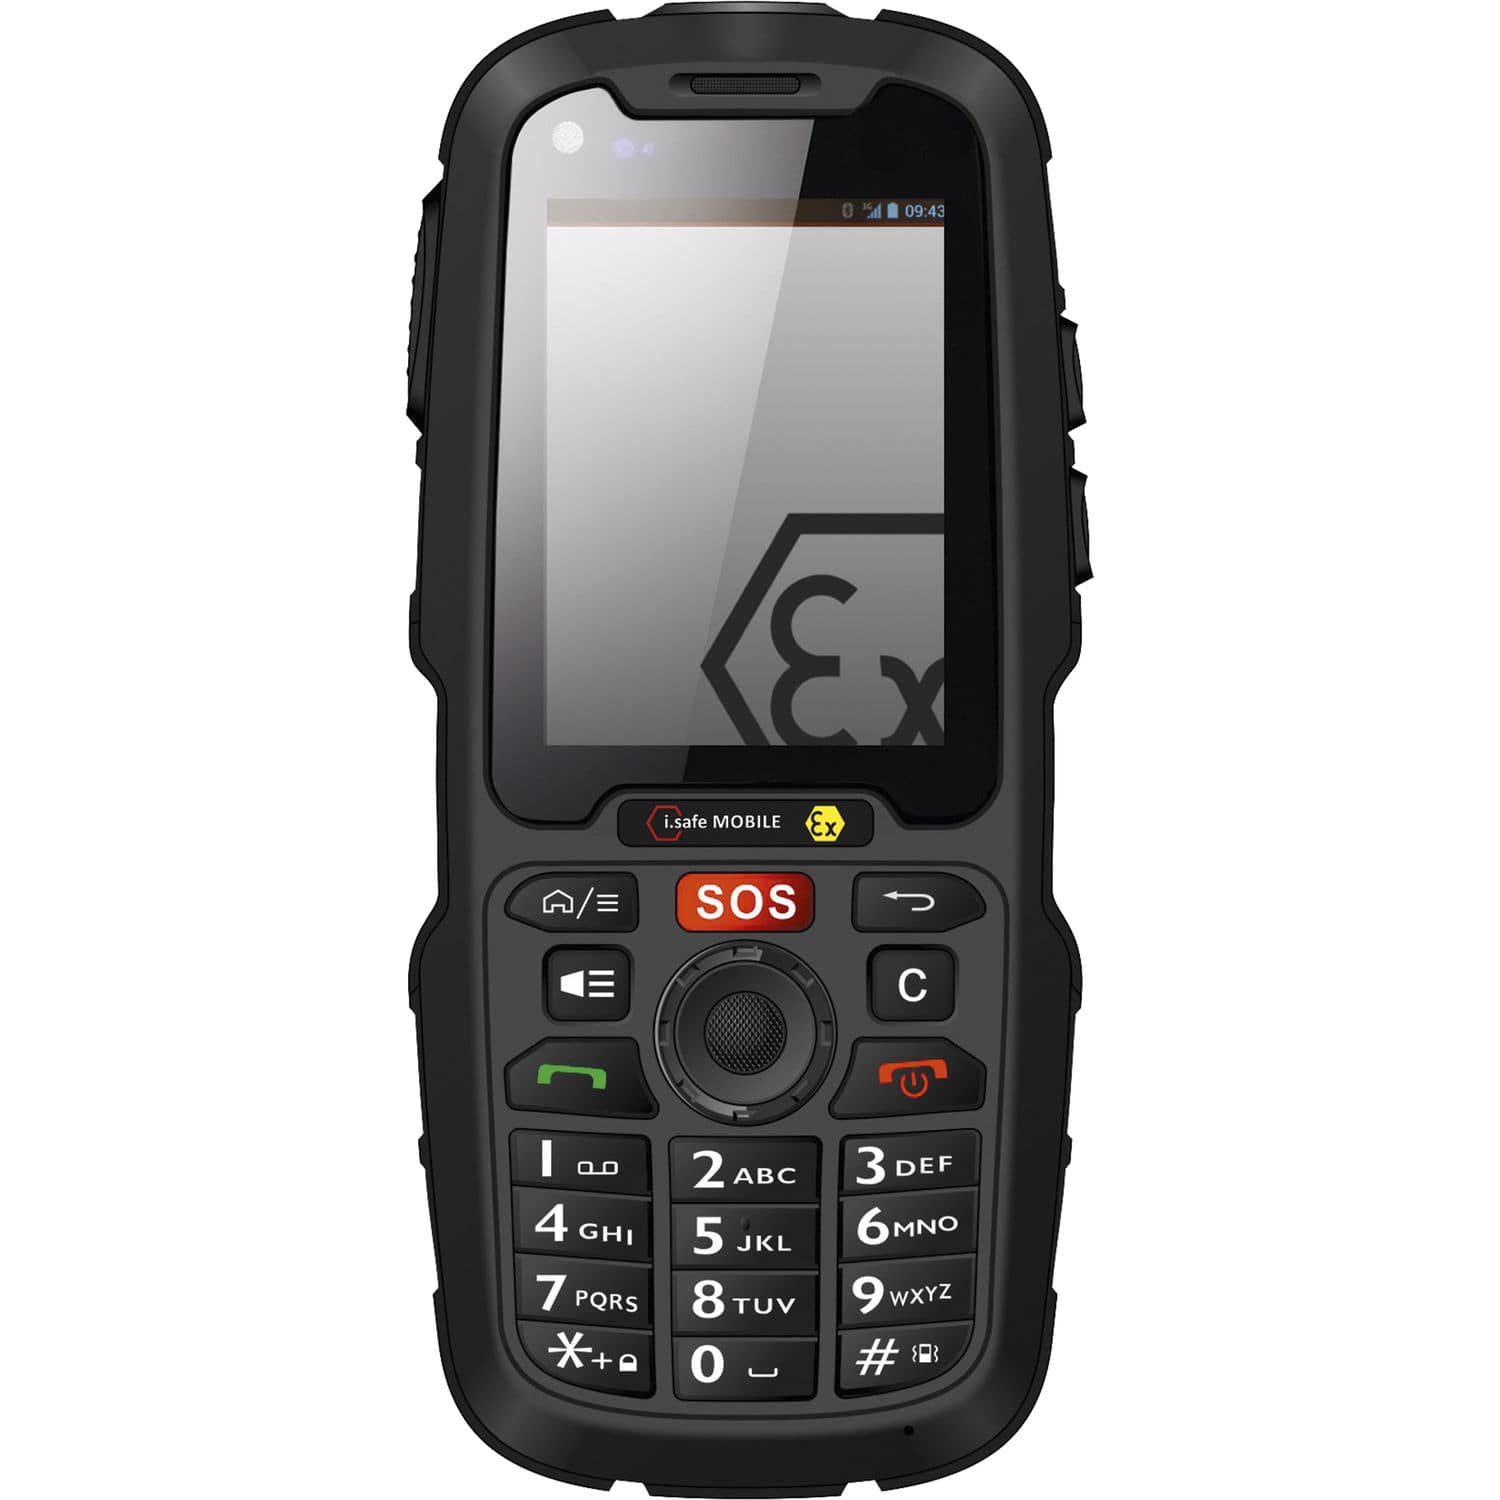 Гсм телефоны. RUGGEAR rg310. Смартфон RUGGEAR rg310. RUGGEAR rg310 аккумулятор. Смартфон i.safe mobile is520.1.